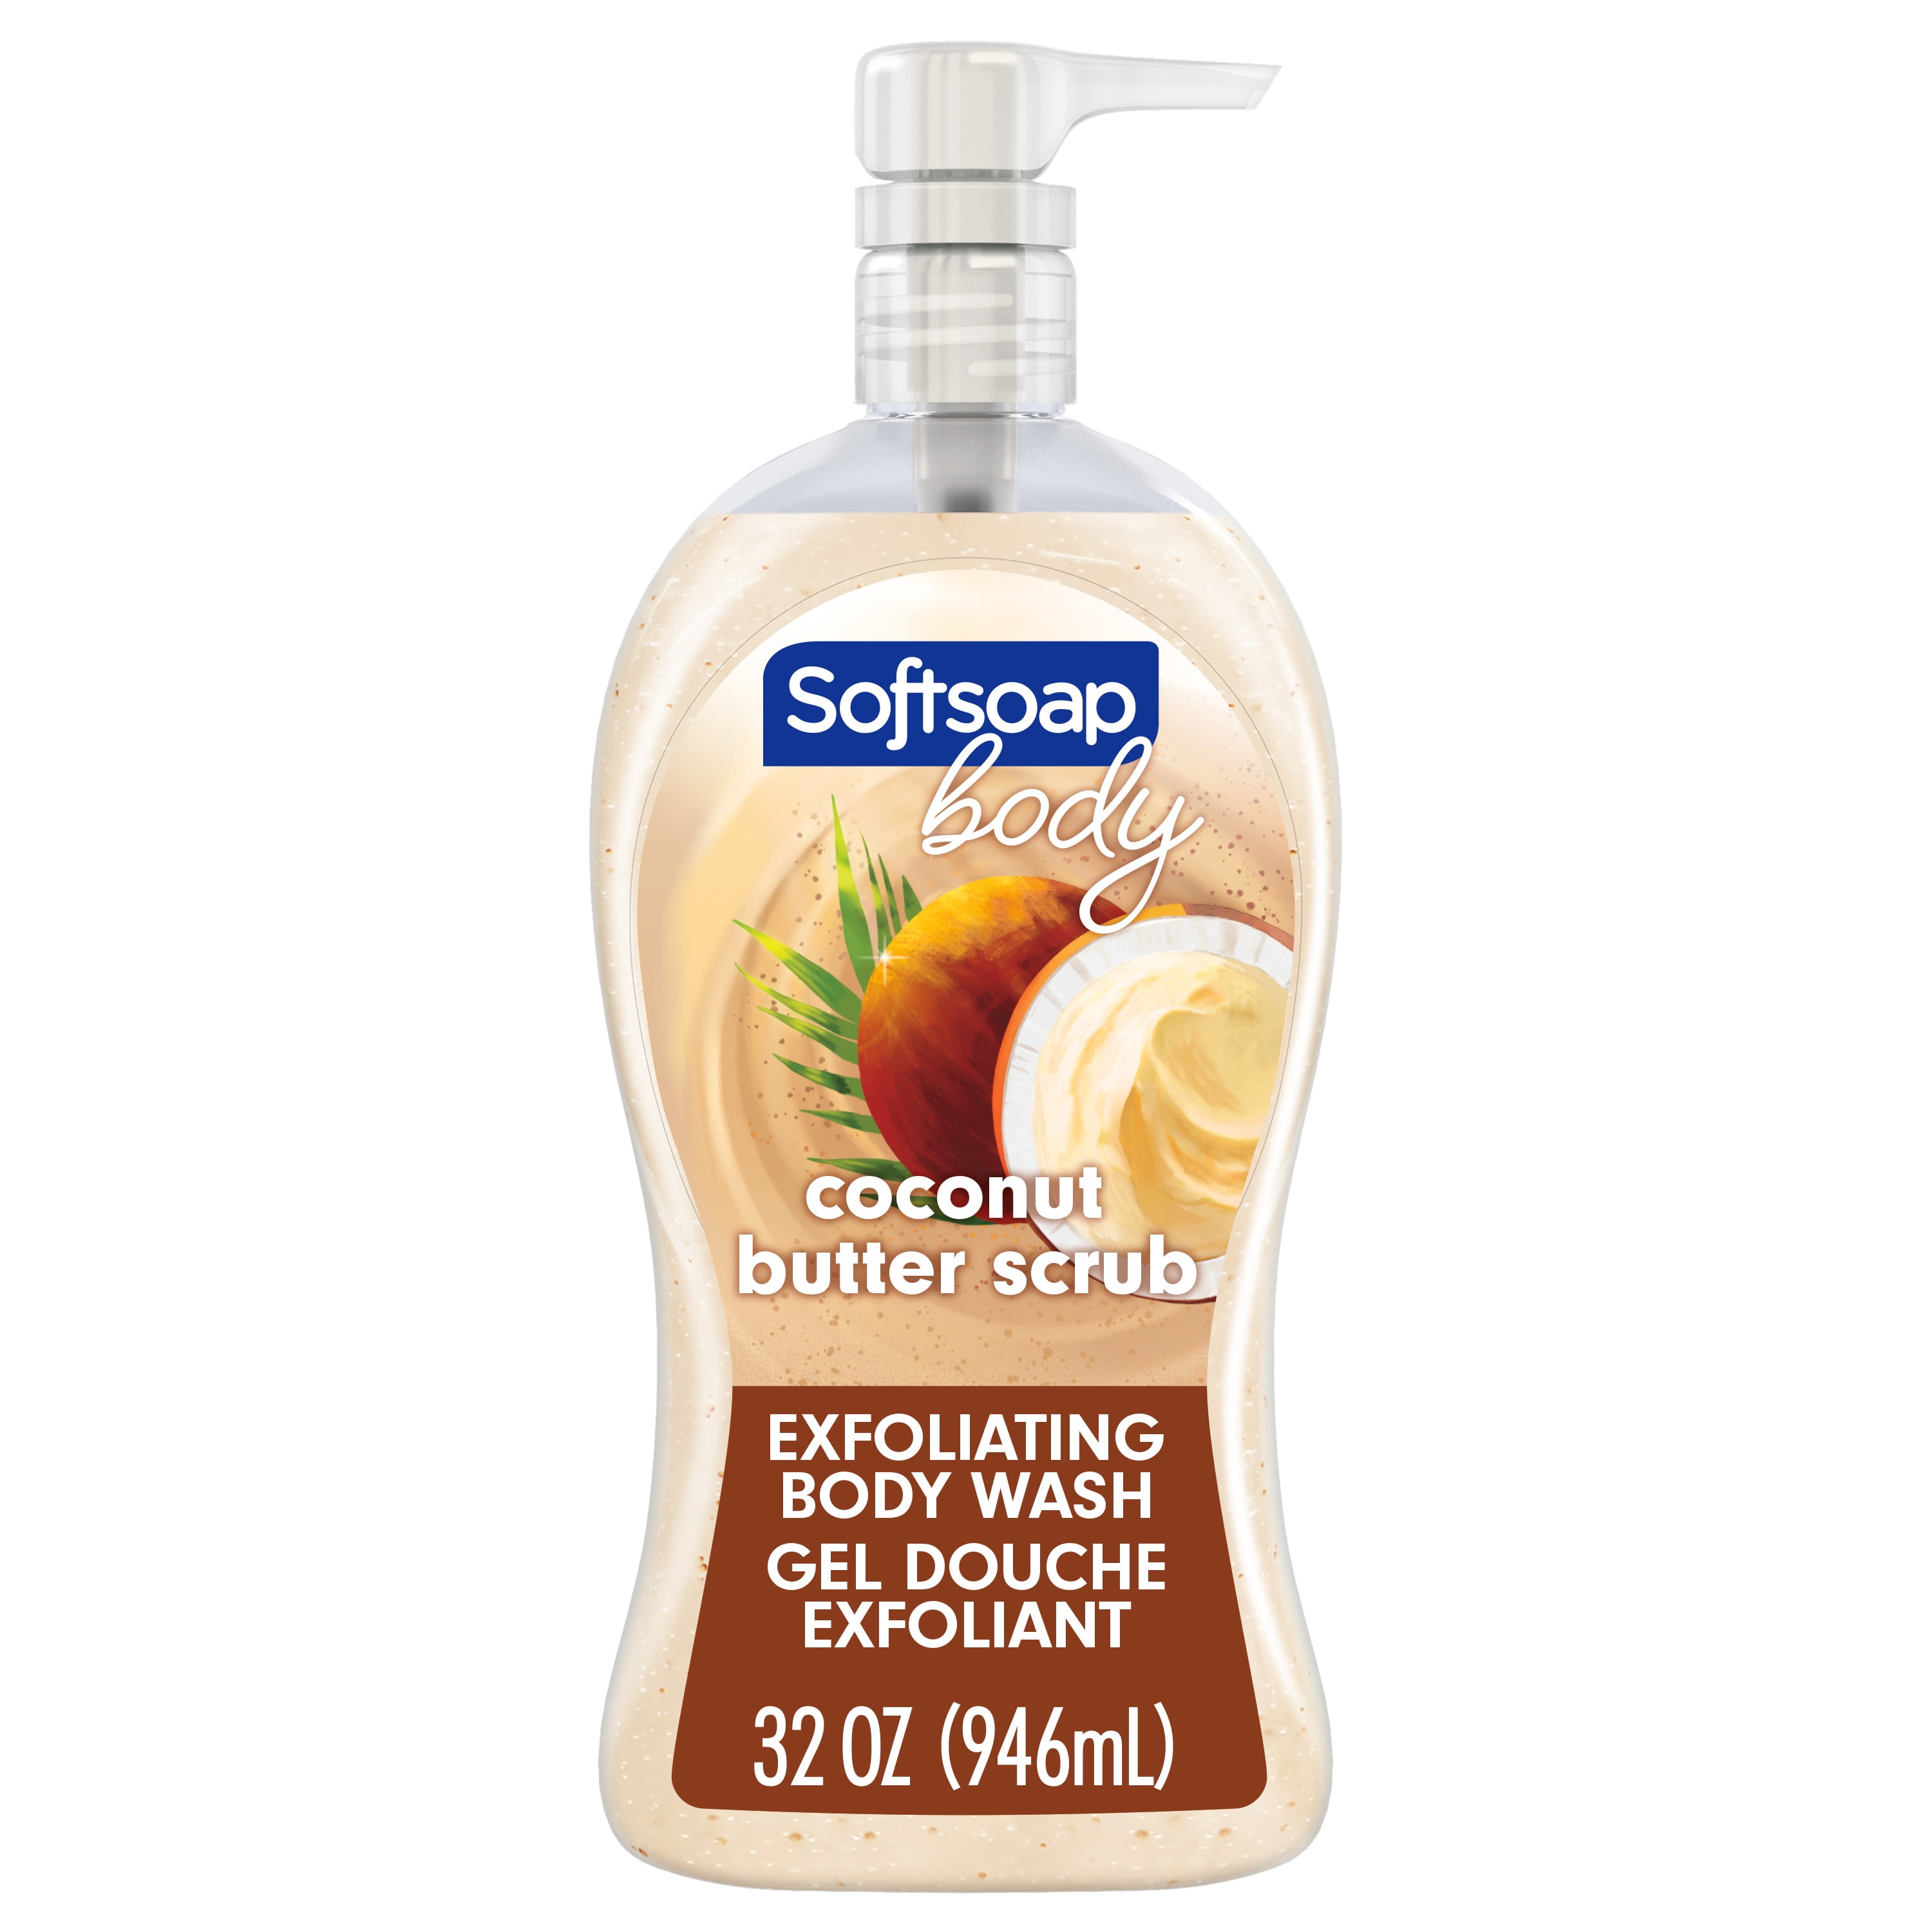 HIBRO Whipped Soap Base Baby Body Wash Body Fruit Scrub Exfoliating Smooth  Fragrance Chicken Skin Scrub Milk 200 